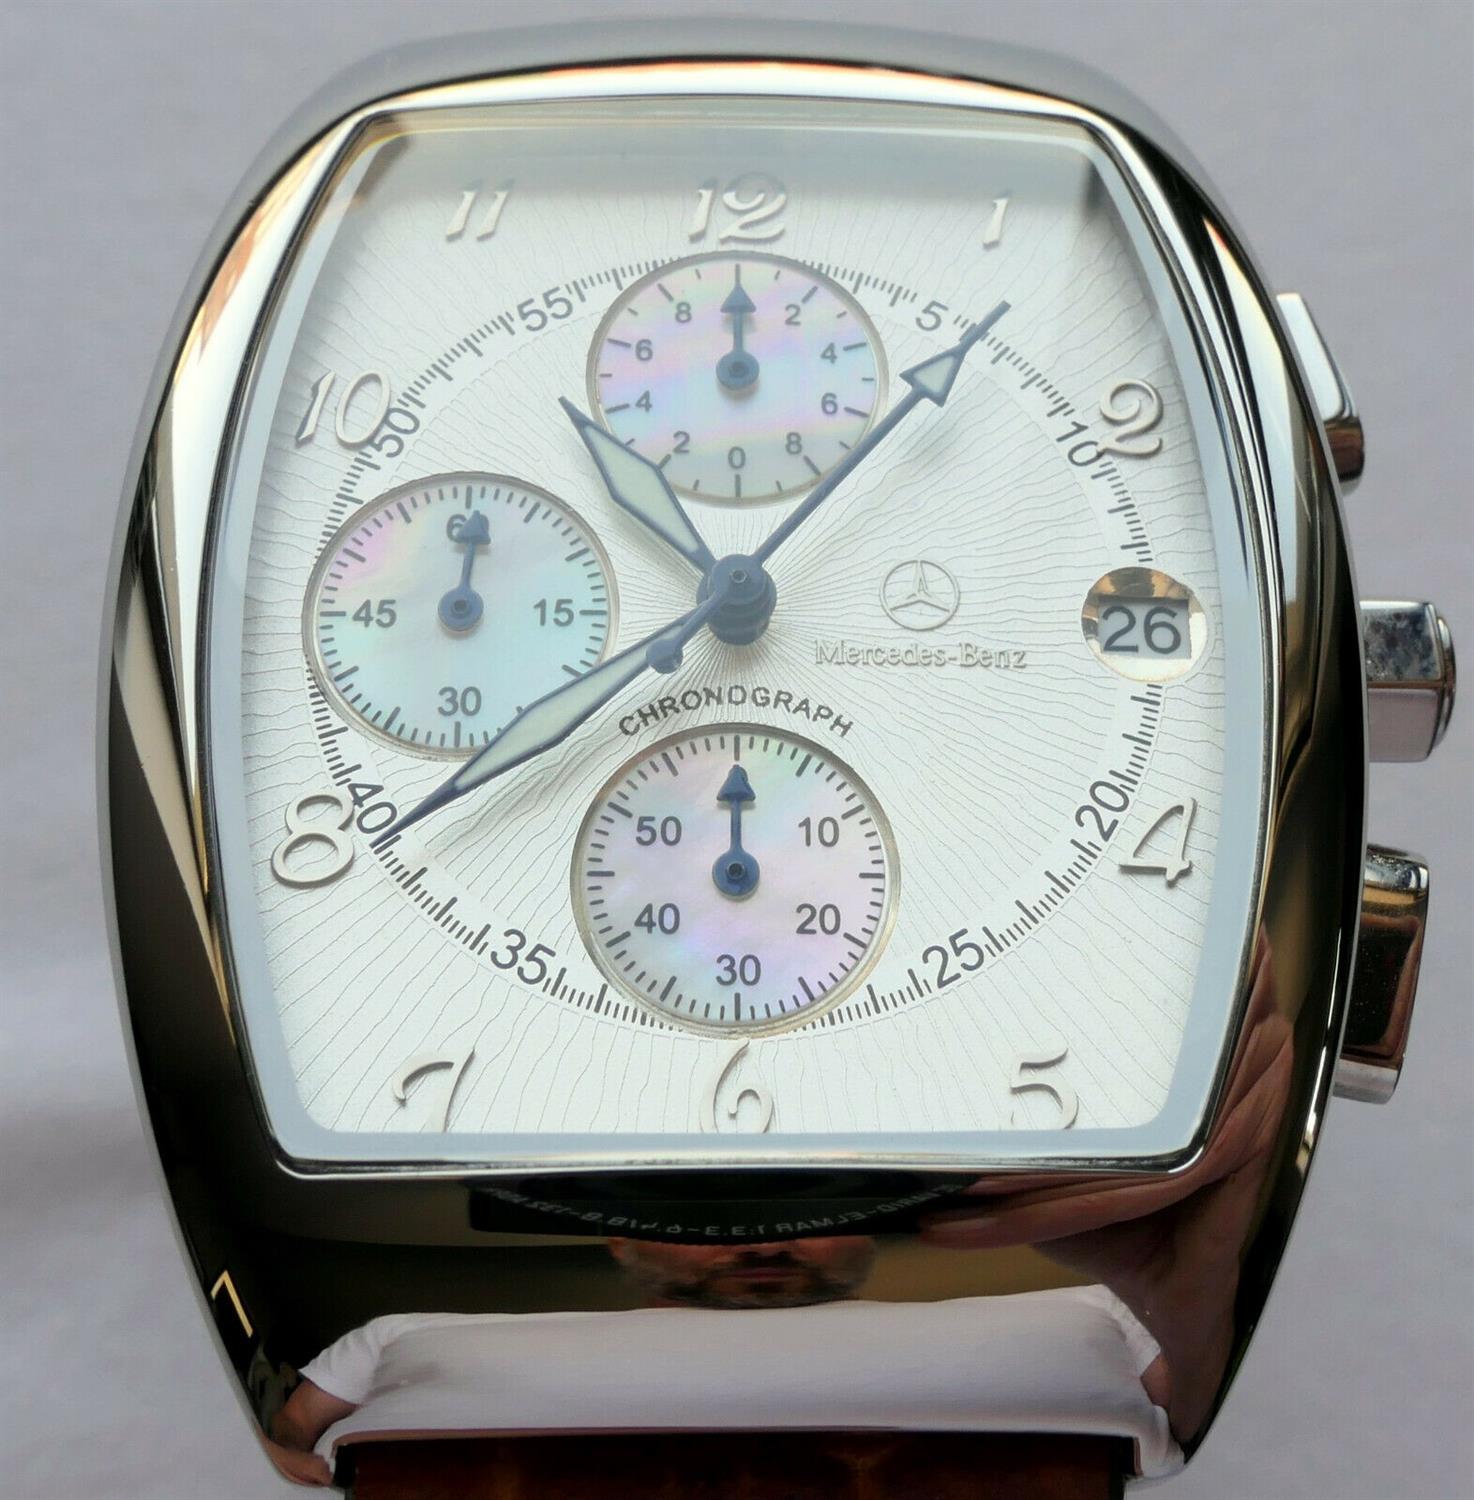 A Superb Mercedes-Benz Art-Deco Style Gentleman’s Chronograph Wristwatch - Image 3 of 9